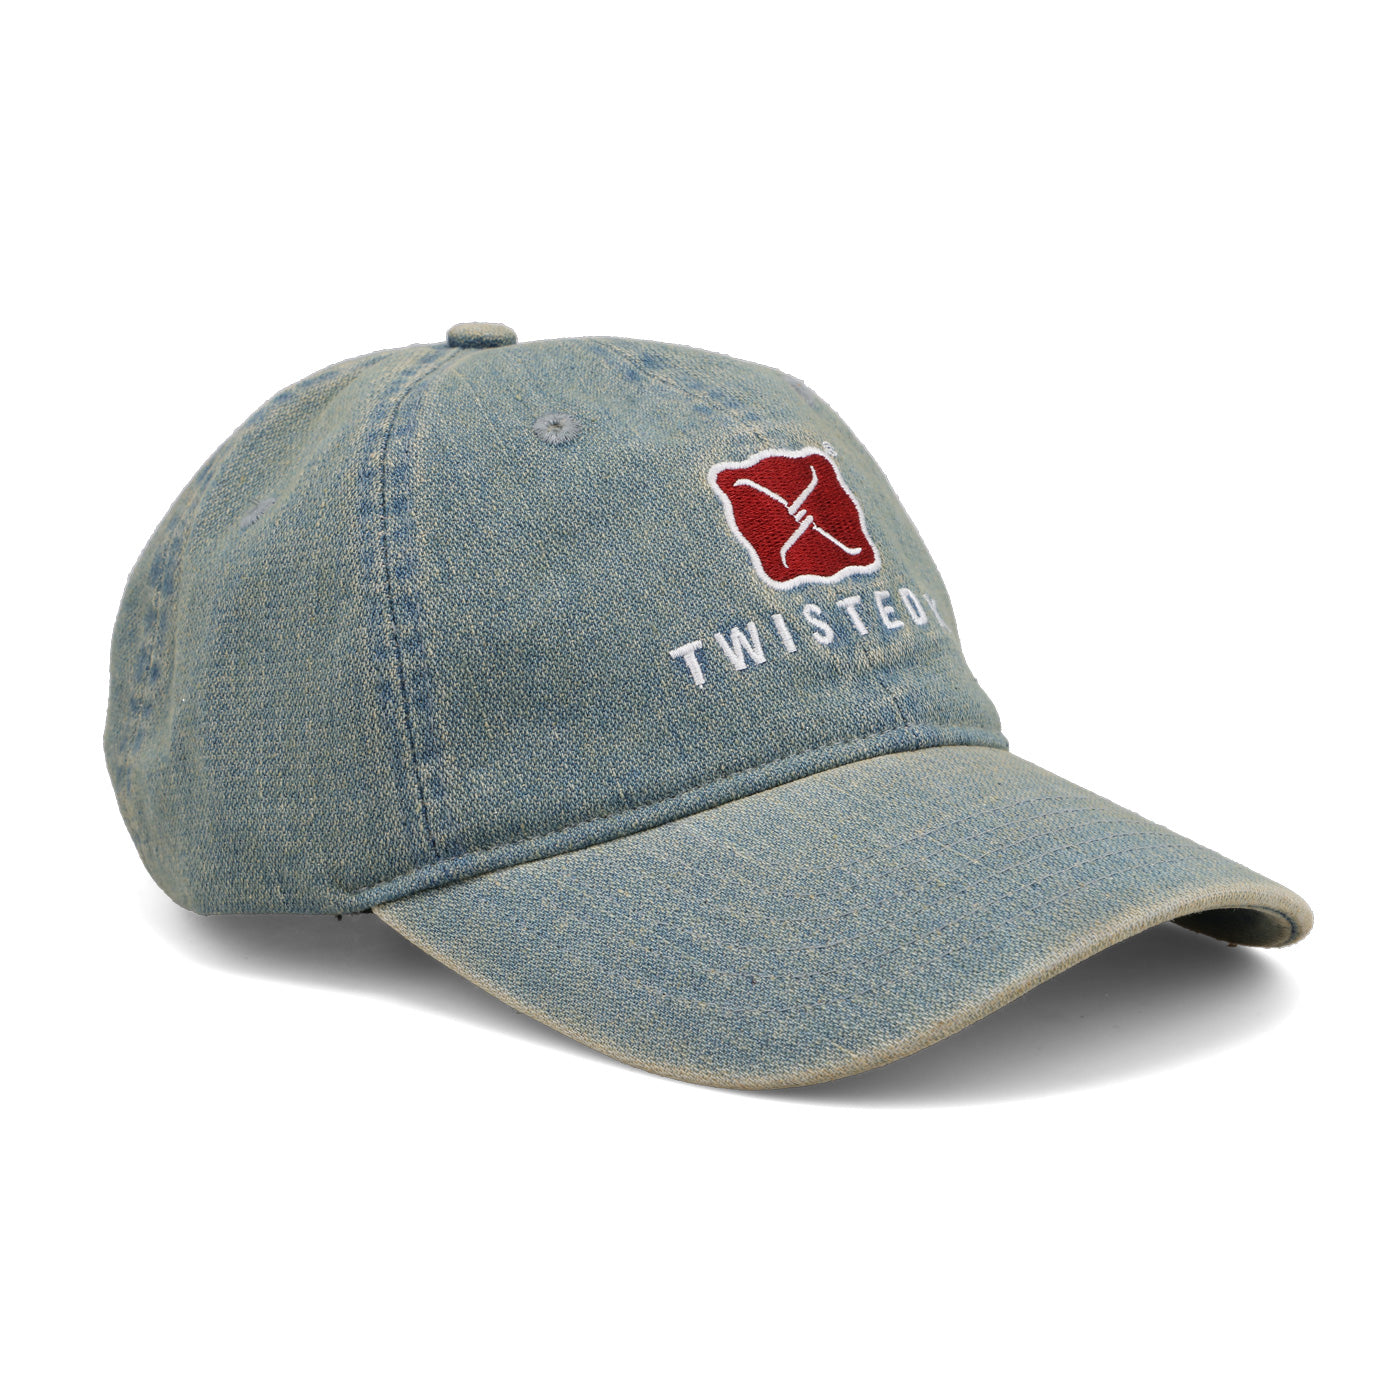 Twisted X Vintage Hat - Distressed Denim